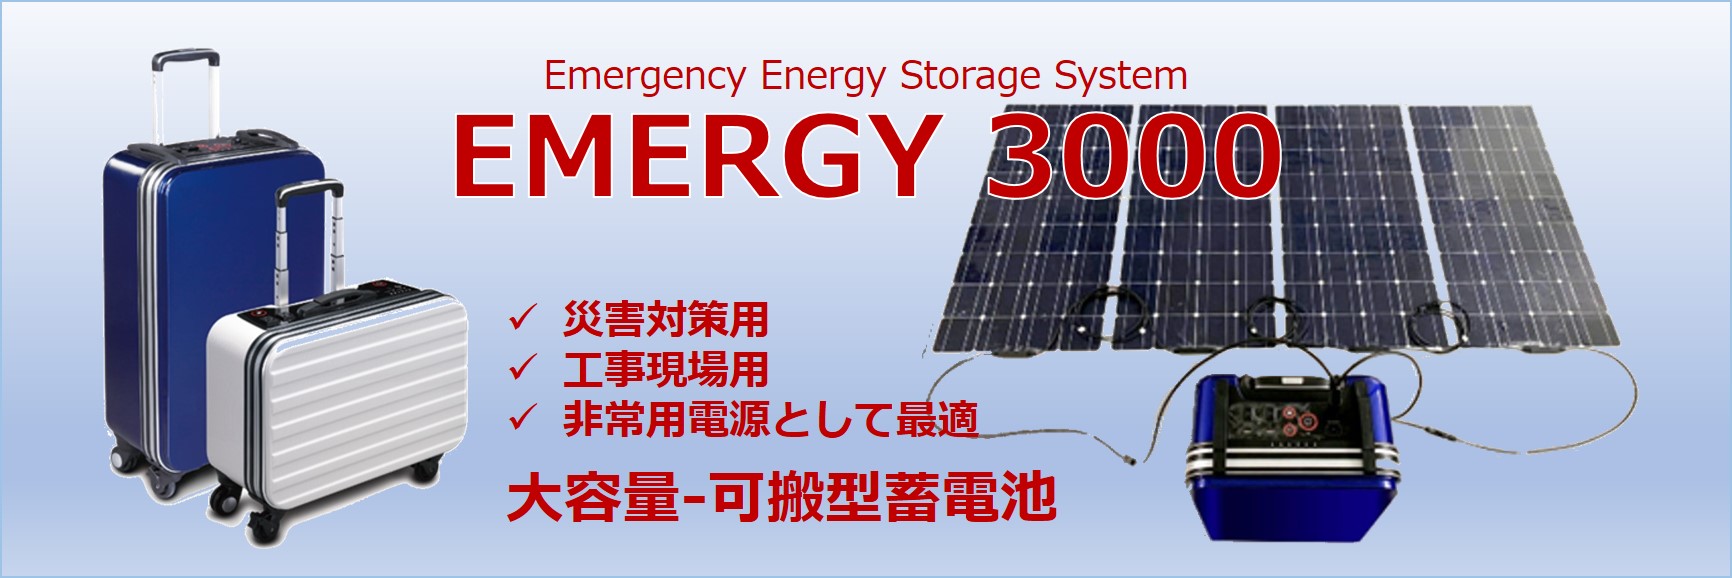 大容量・可搬型蓄電池 EMERGY3000 災害対策、停電対策、非常用電源として最適